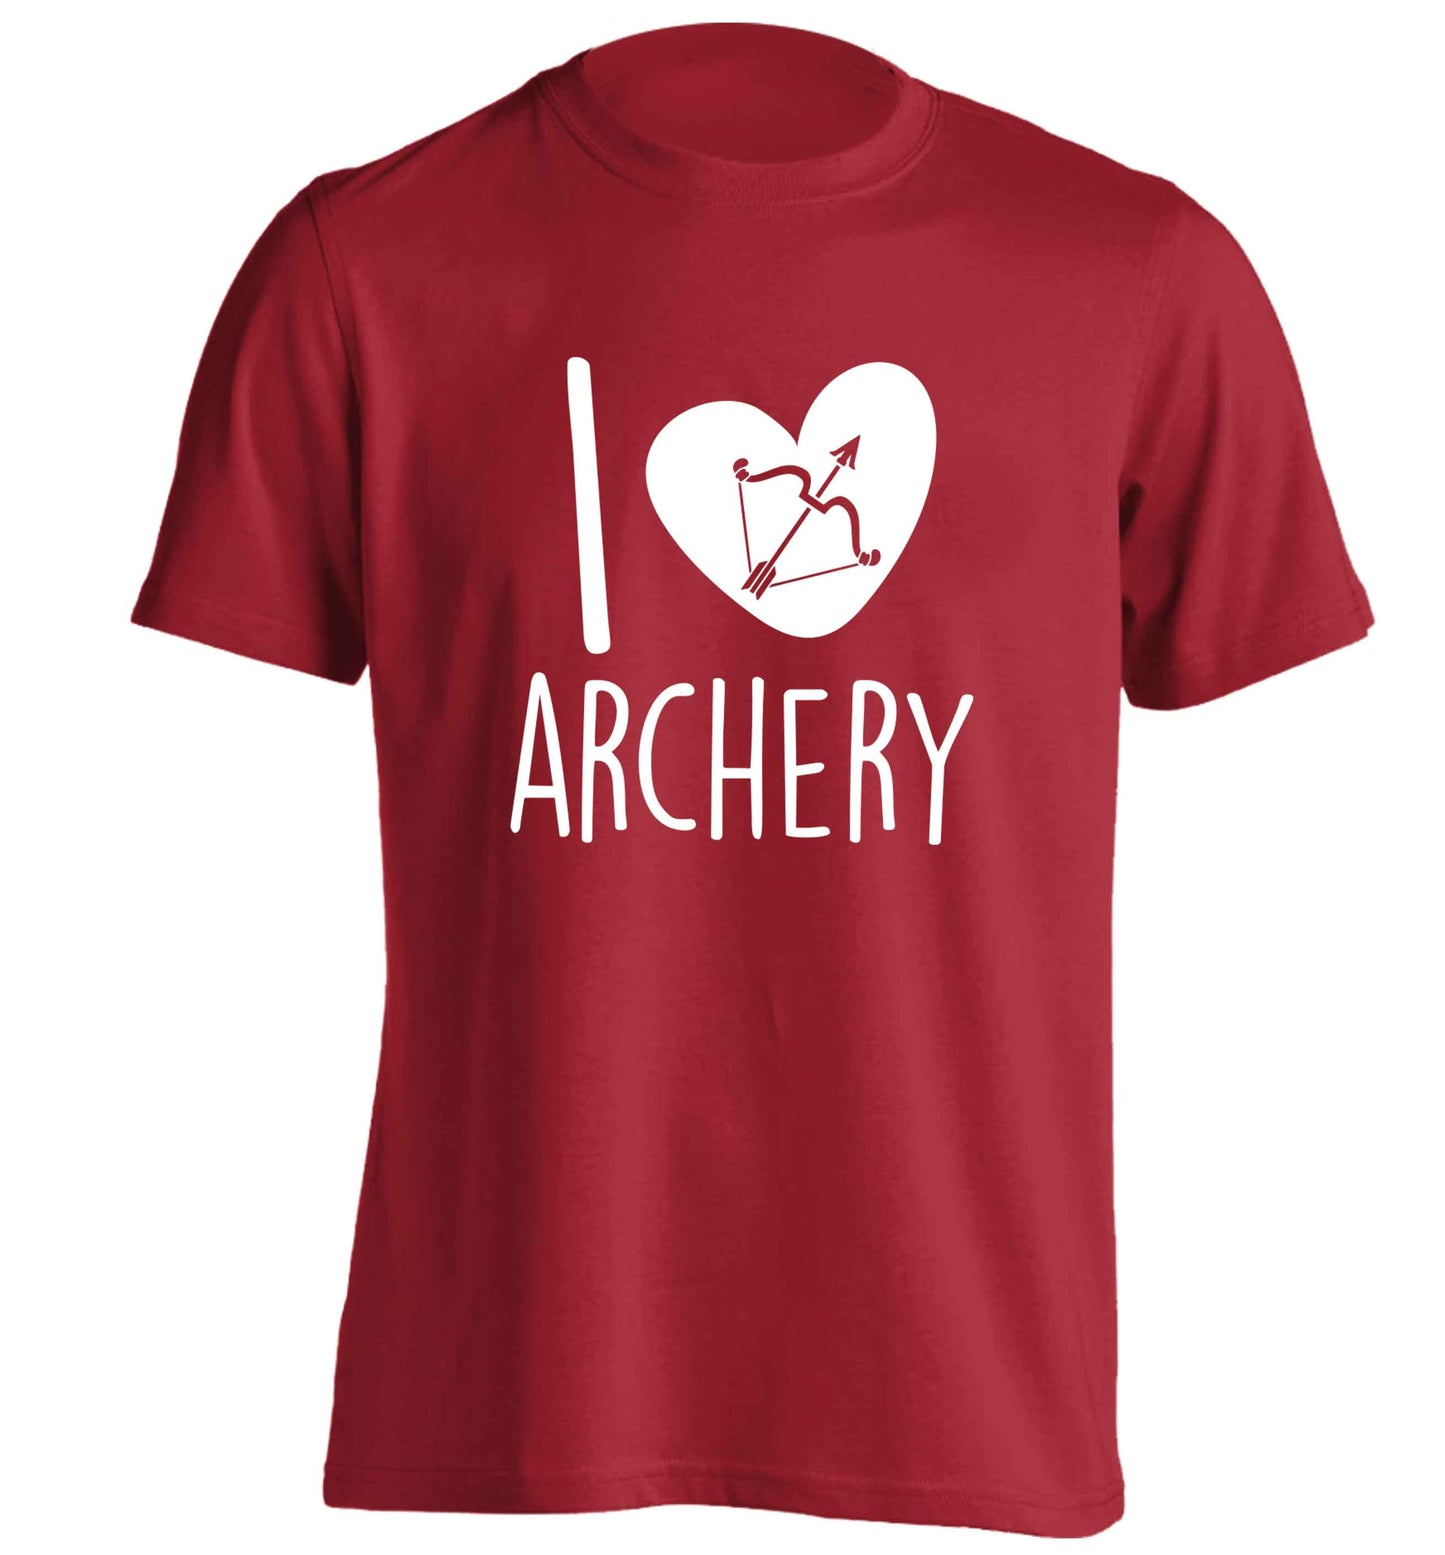 I love archery adults unisex red Tshirt 2XL